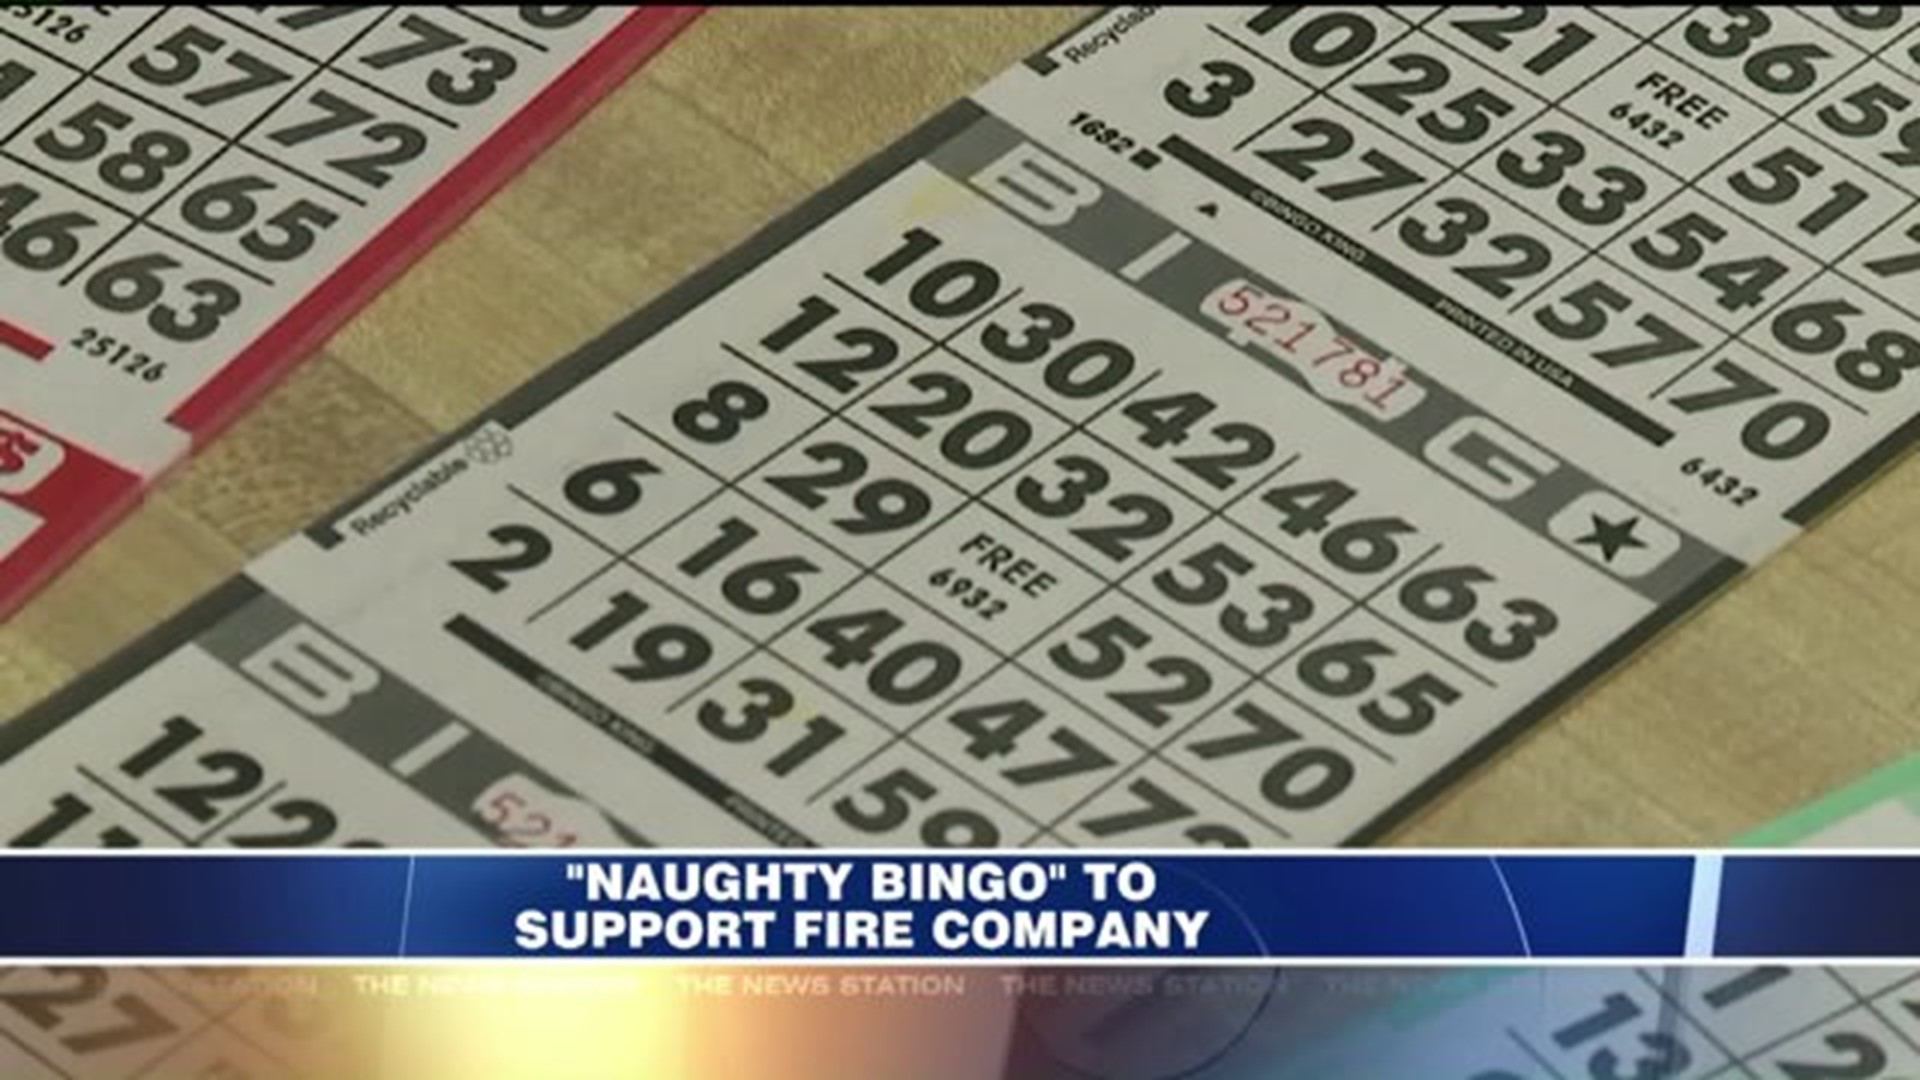 Naughty Bingo to Support Fire Company